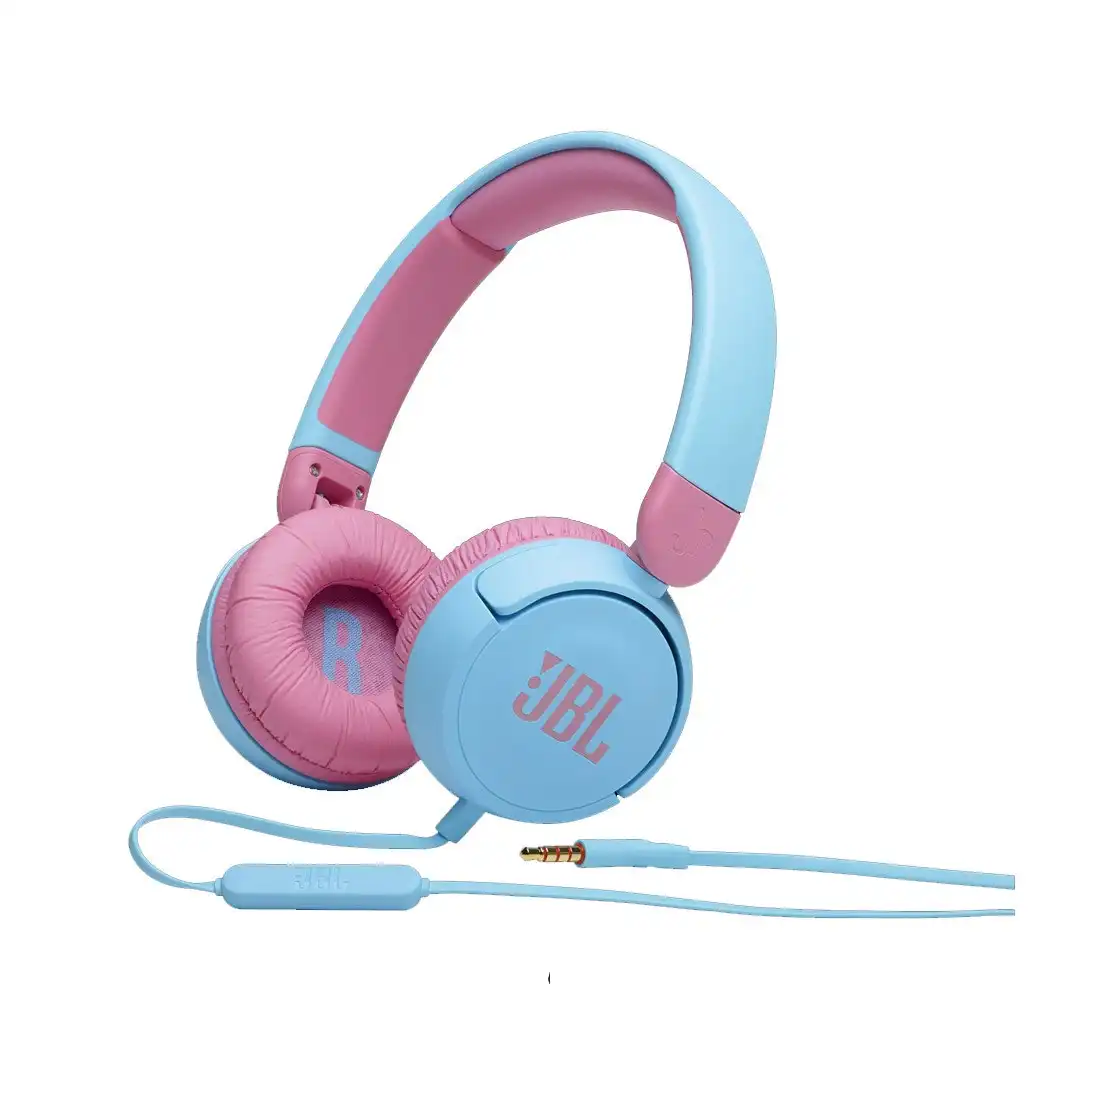 JBL JR310 Kids Wired On-Ear Headphones - Blue/Pink